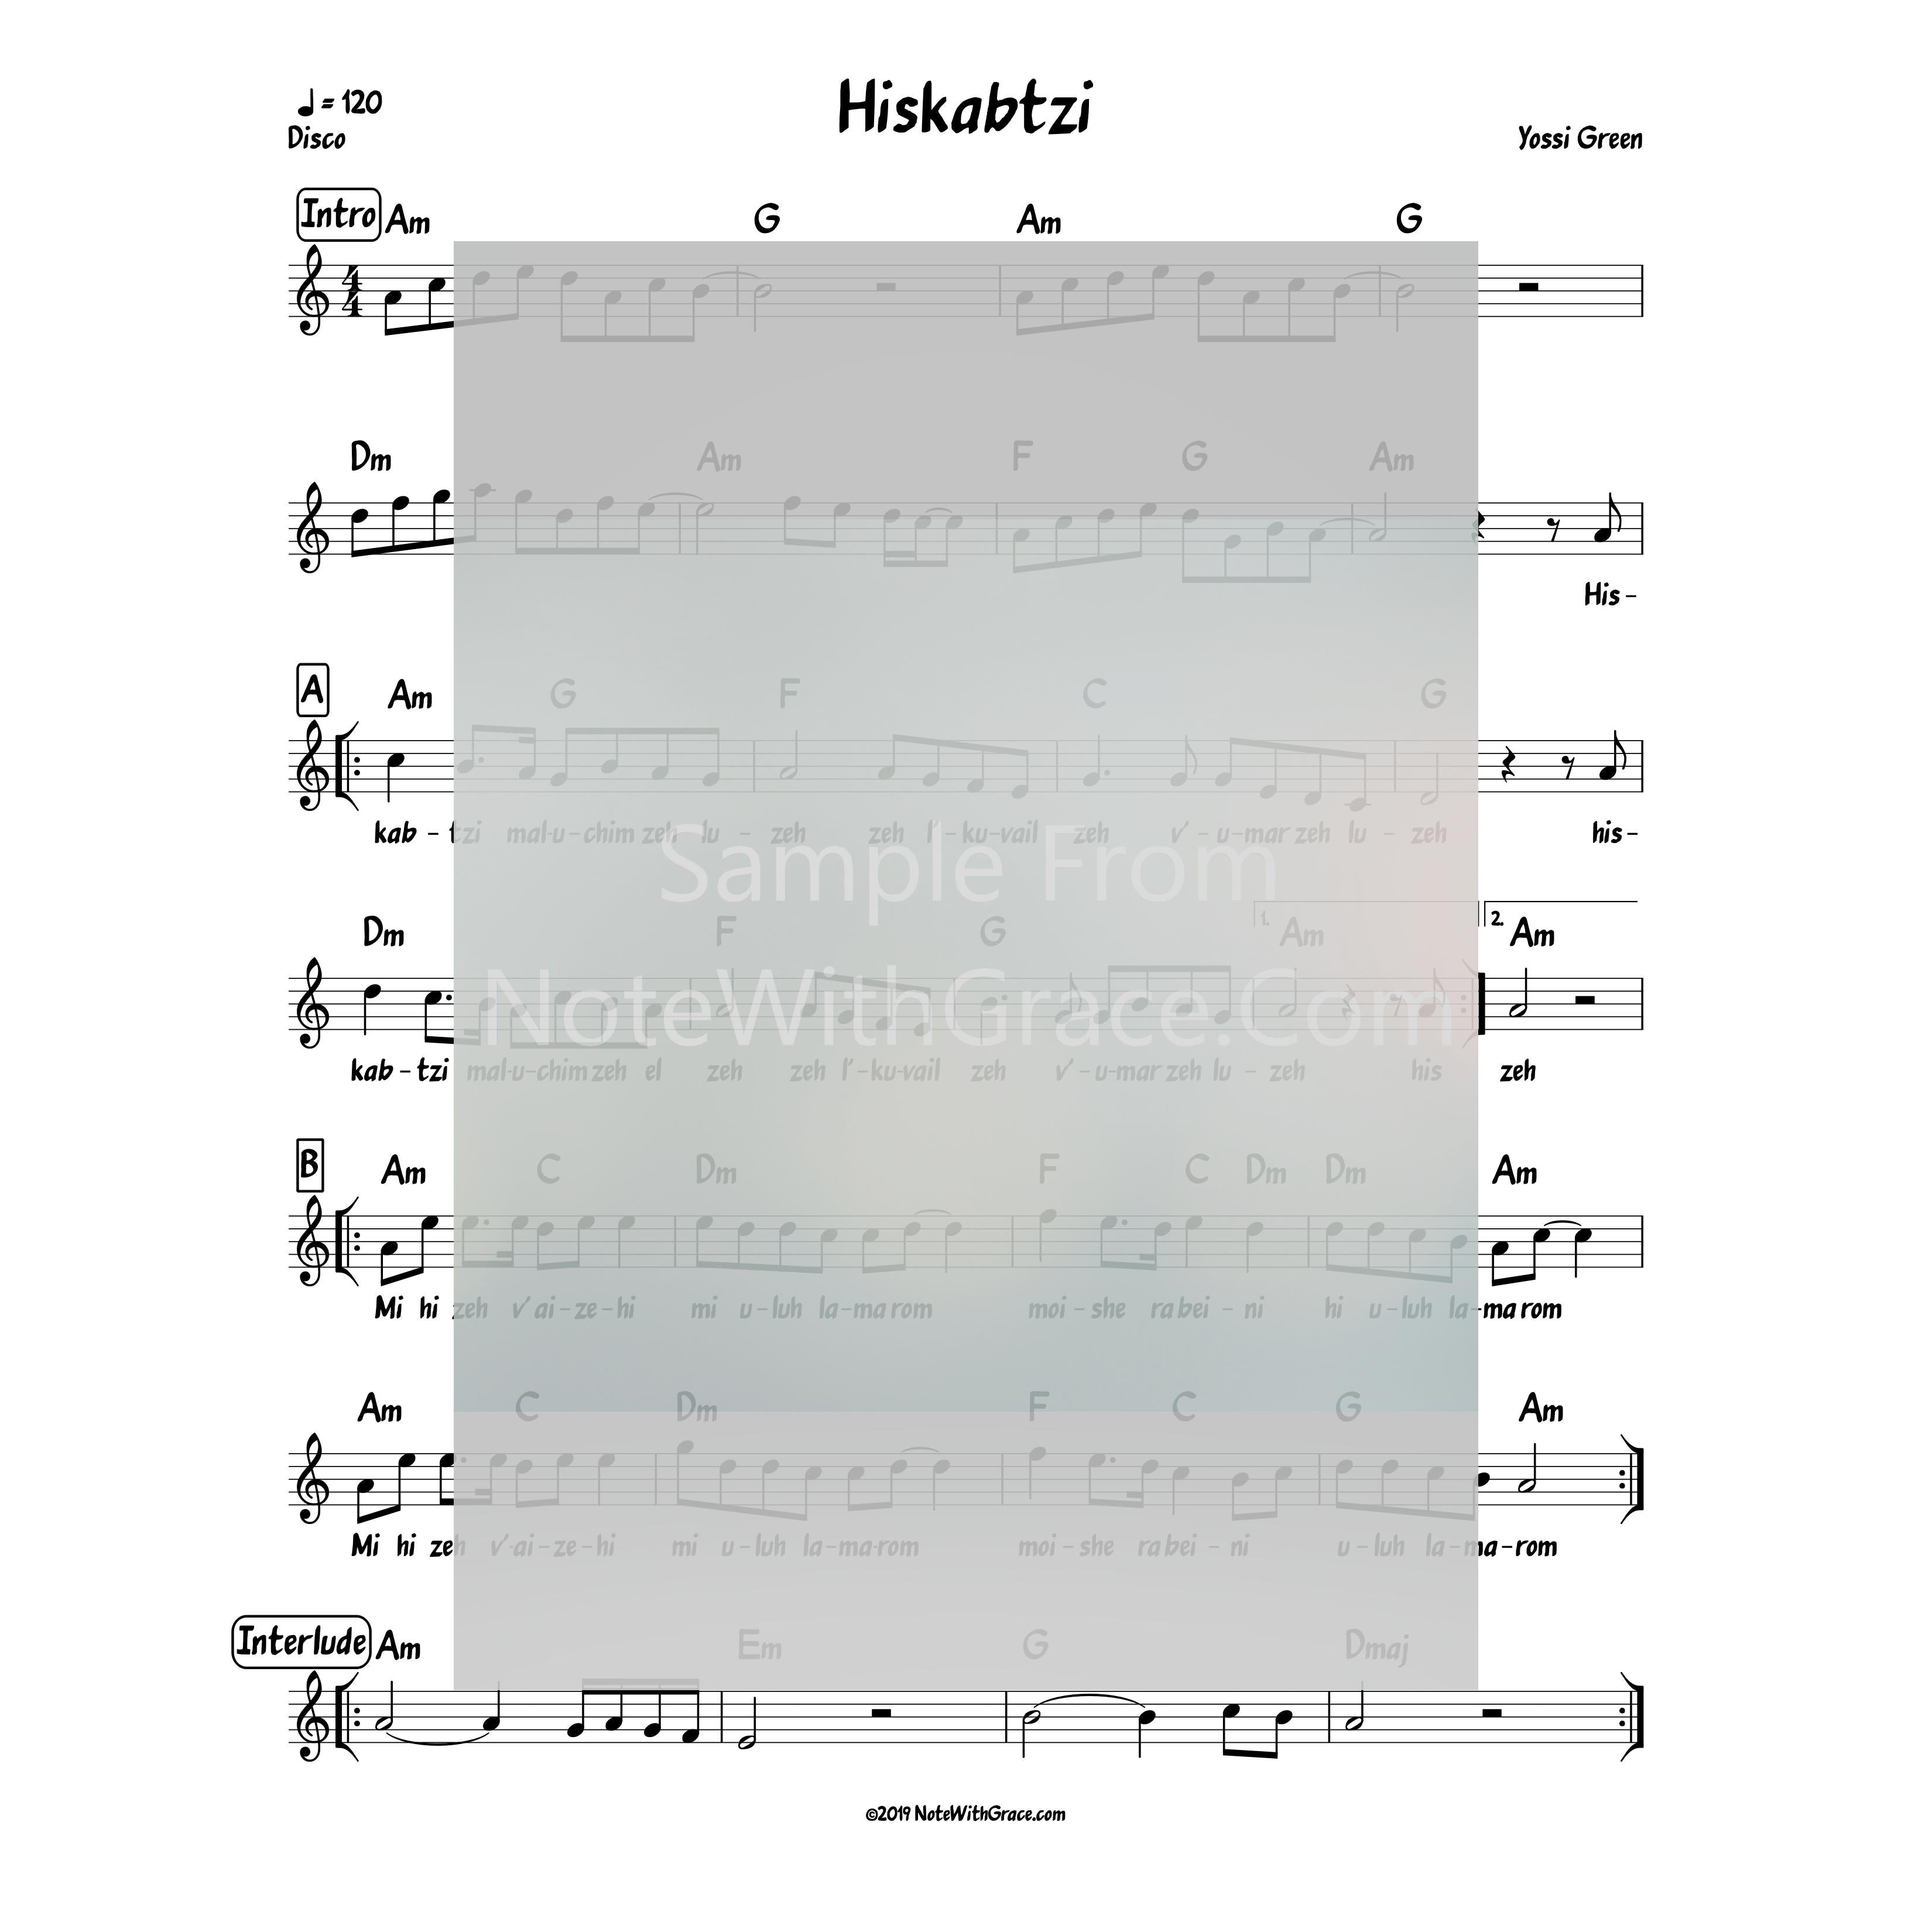 Hiskabtzi Lead Sheet (Yossi Green) Album: Yiddish Nachas (Released 2014)-Sheet music-NoteWithGrace.com